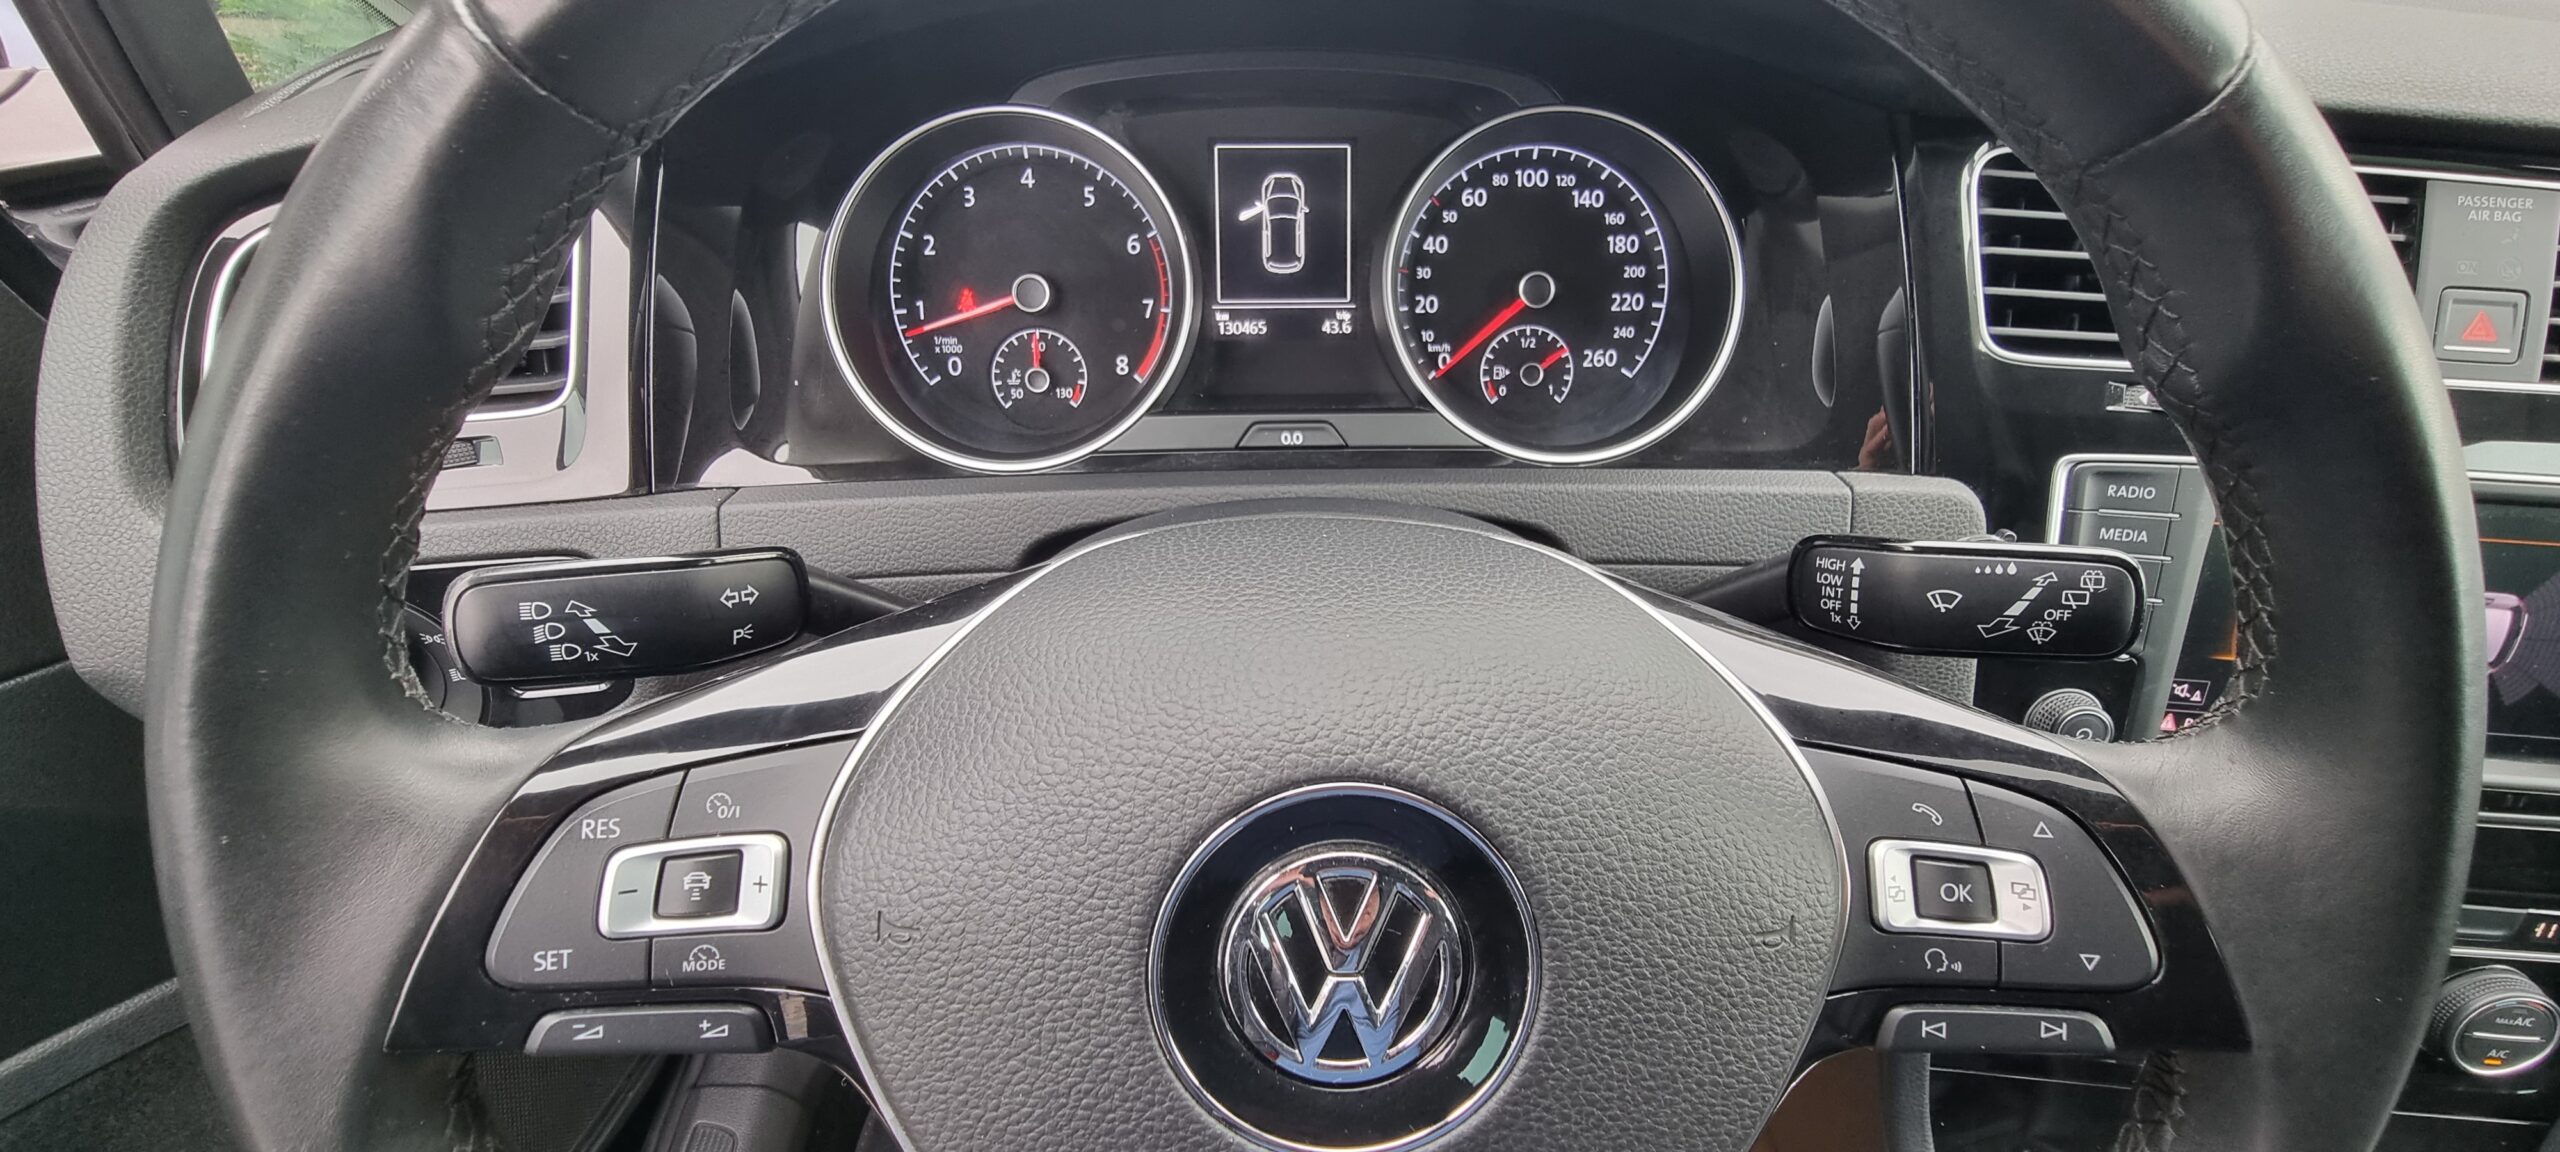 VW GOLF 7 ALLSTAR, 1.4 BENZINA, 125 CP, EURO 6, AN 2016